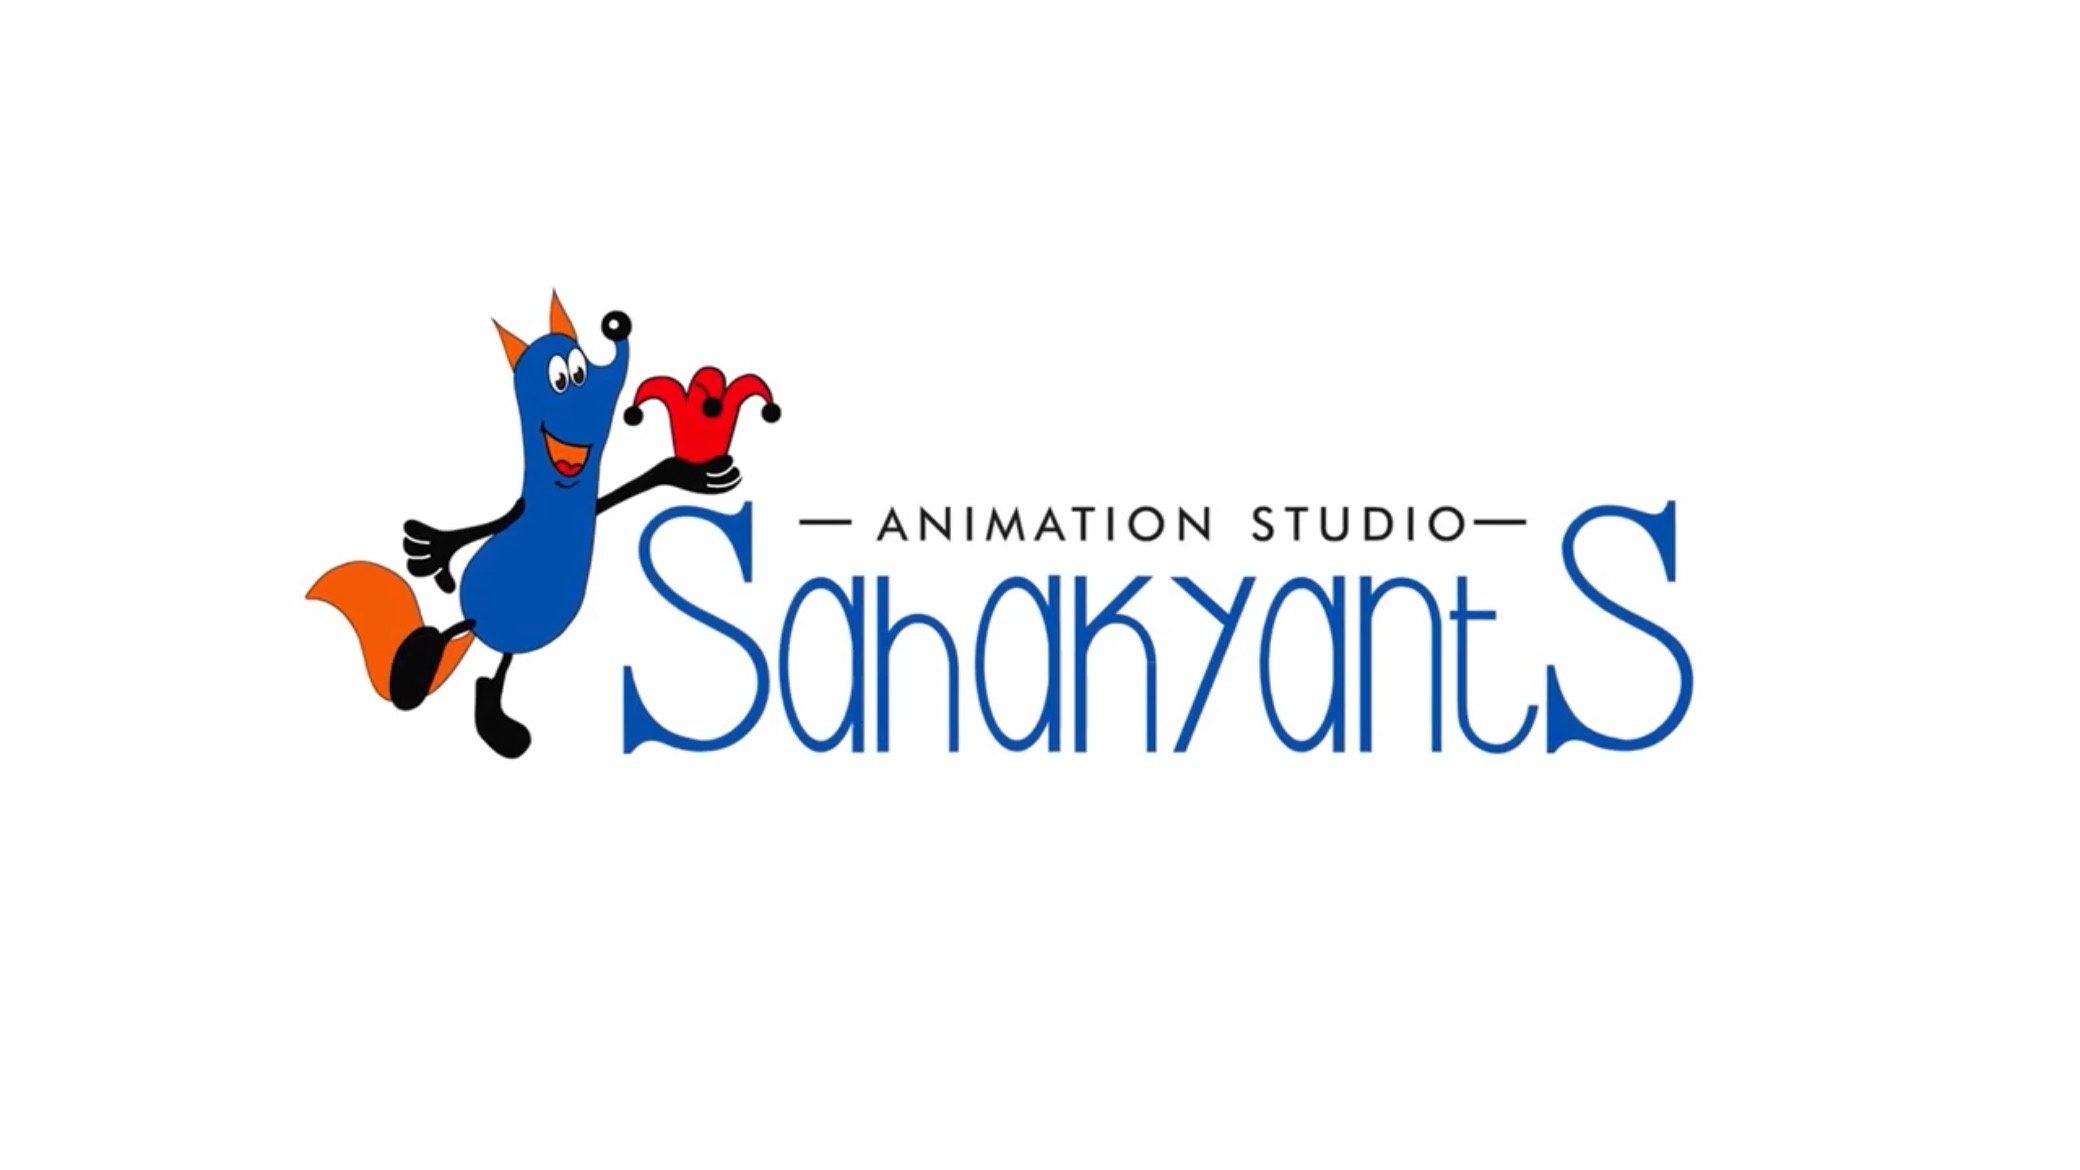 Studio demo. Sahakyants animation Studio. Robert Sahakyants cartoon. Sahakyants animation Studio ashxahagrutyuin.